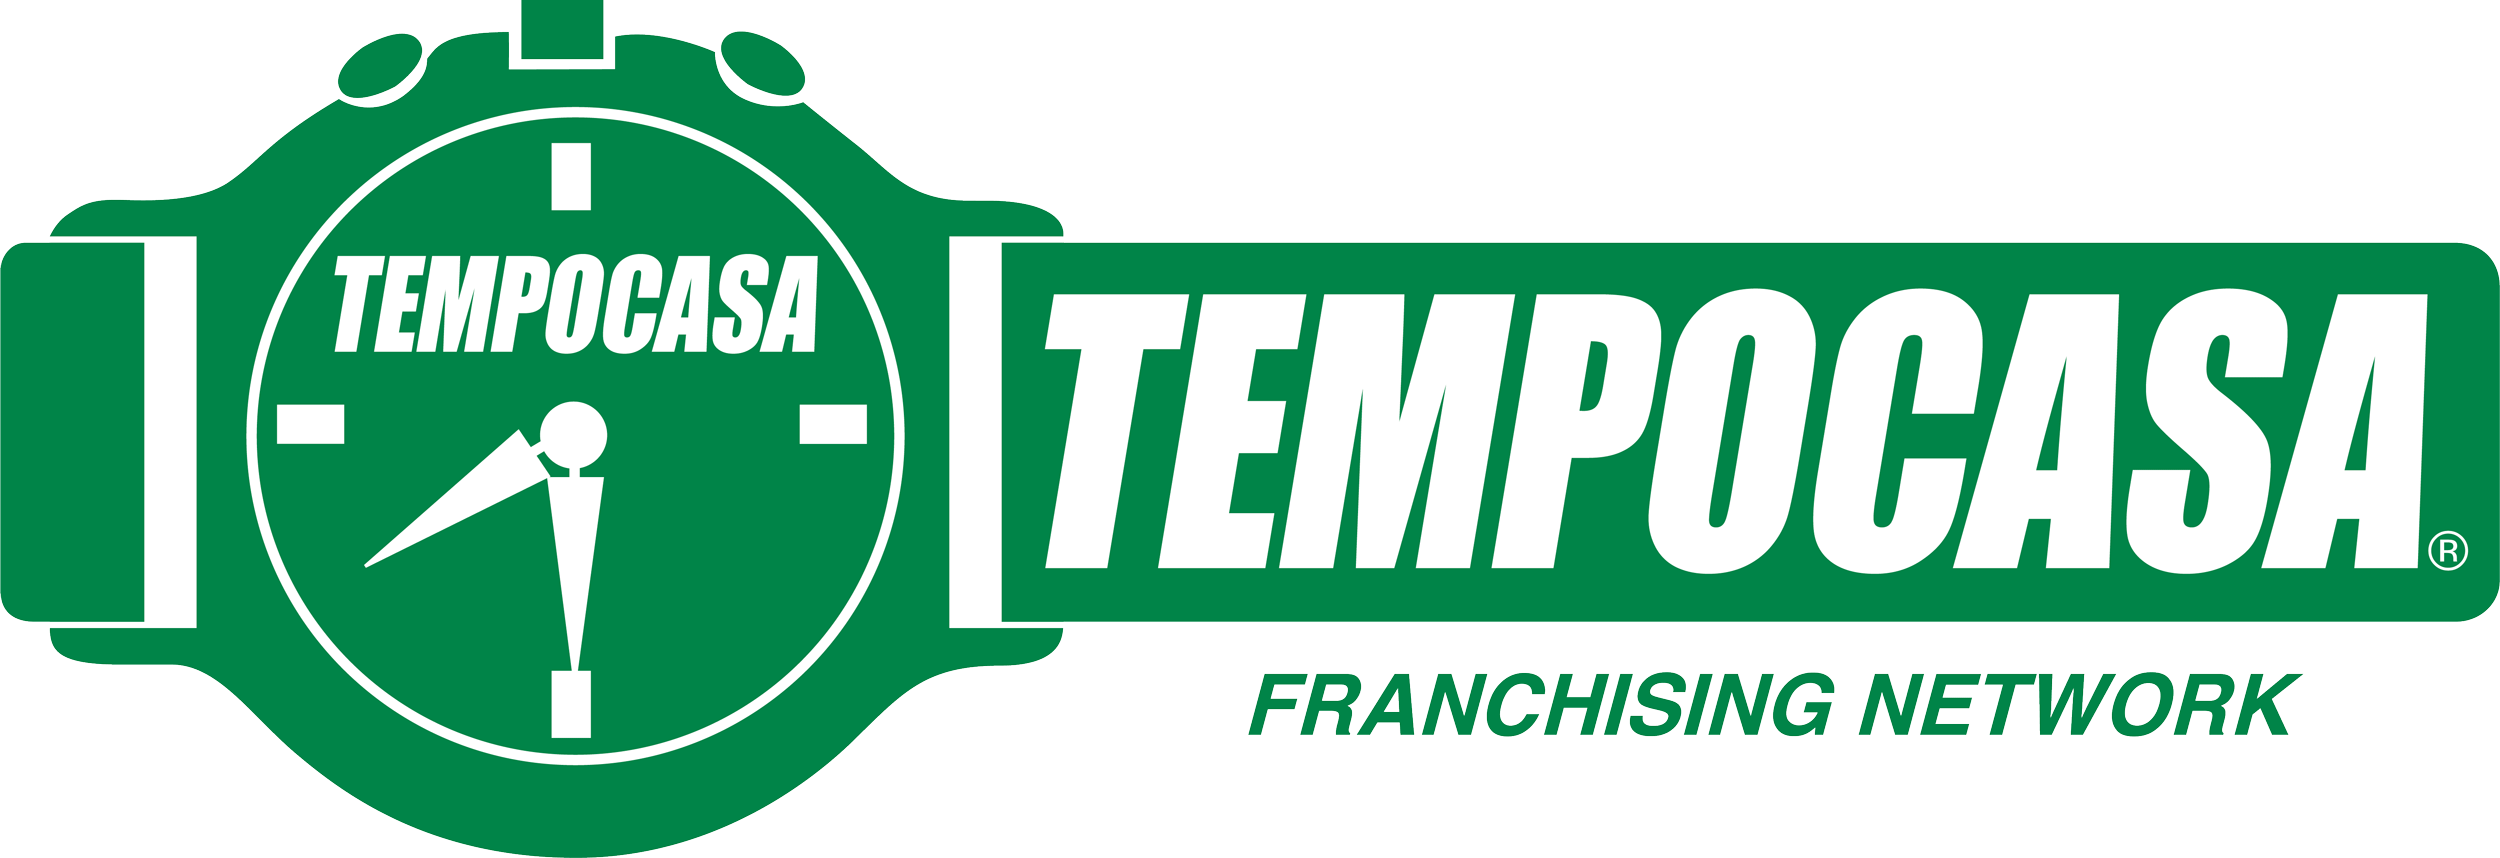 Torino - Centro/Statuto - Tempocasa